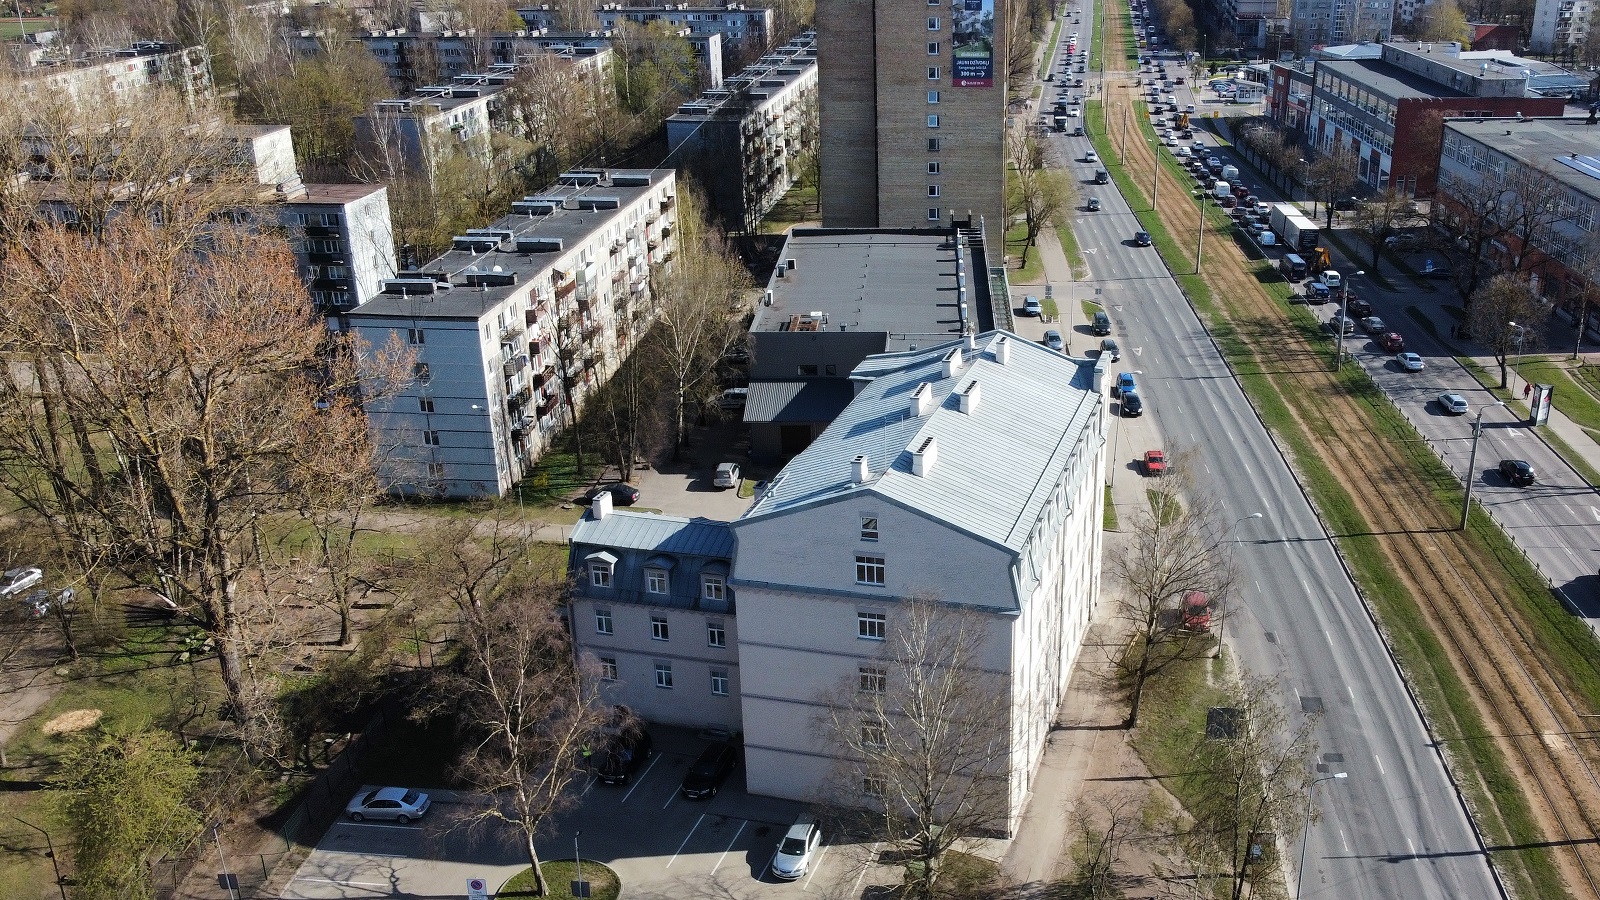 Investment property, Maskavas street - Image 1